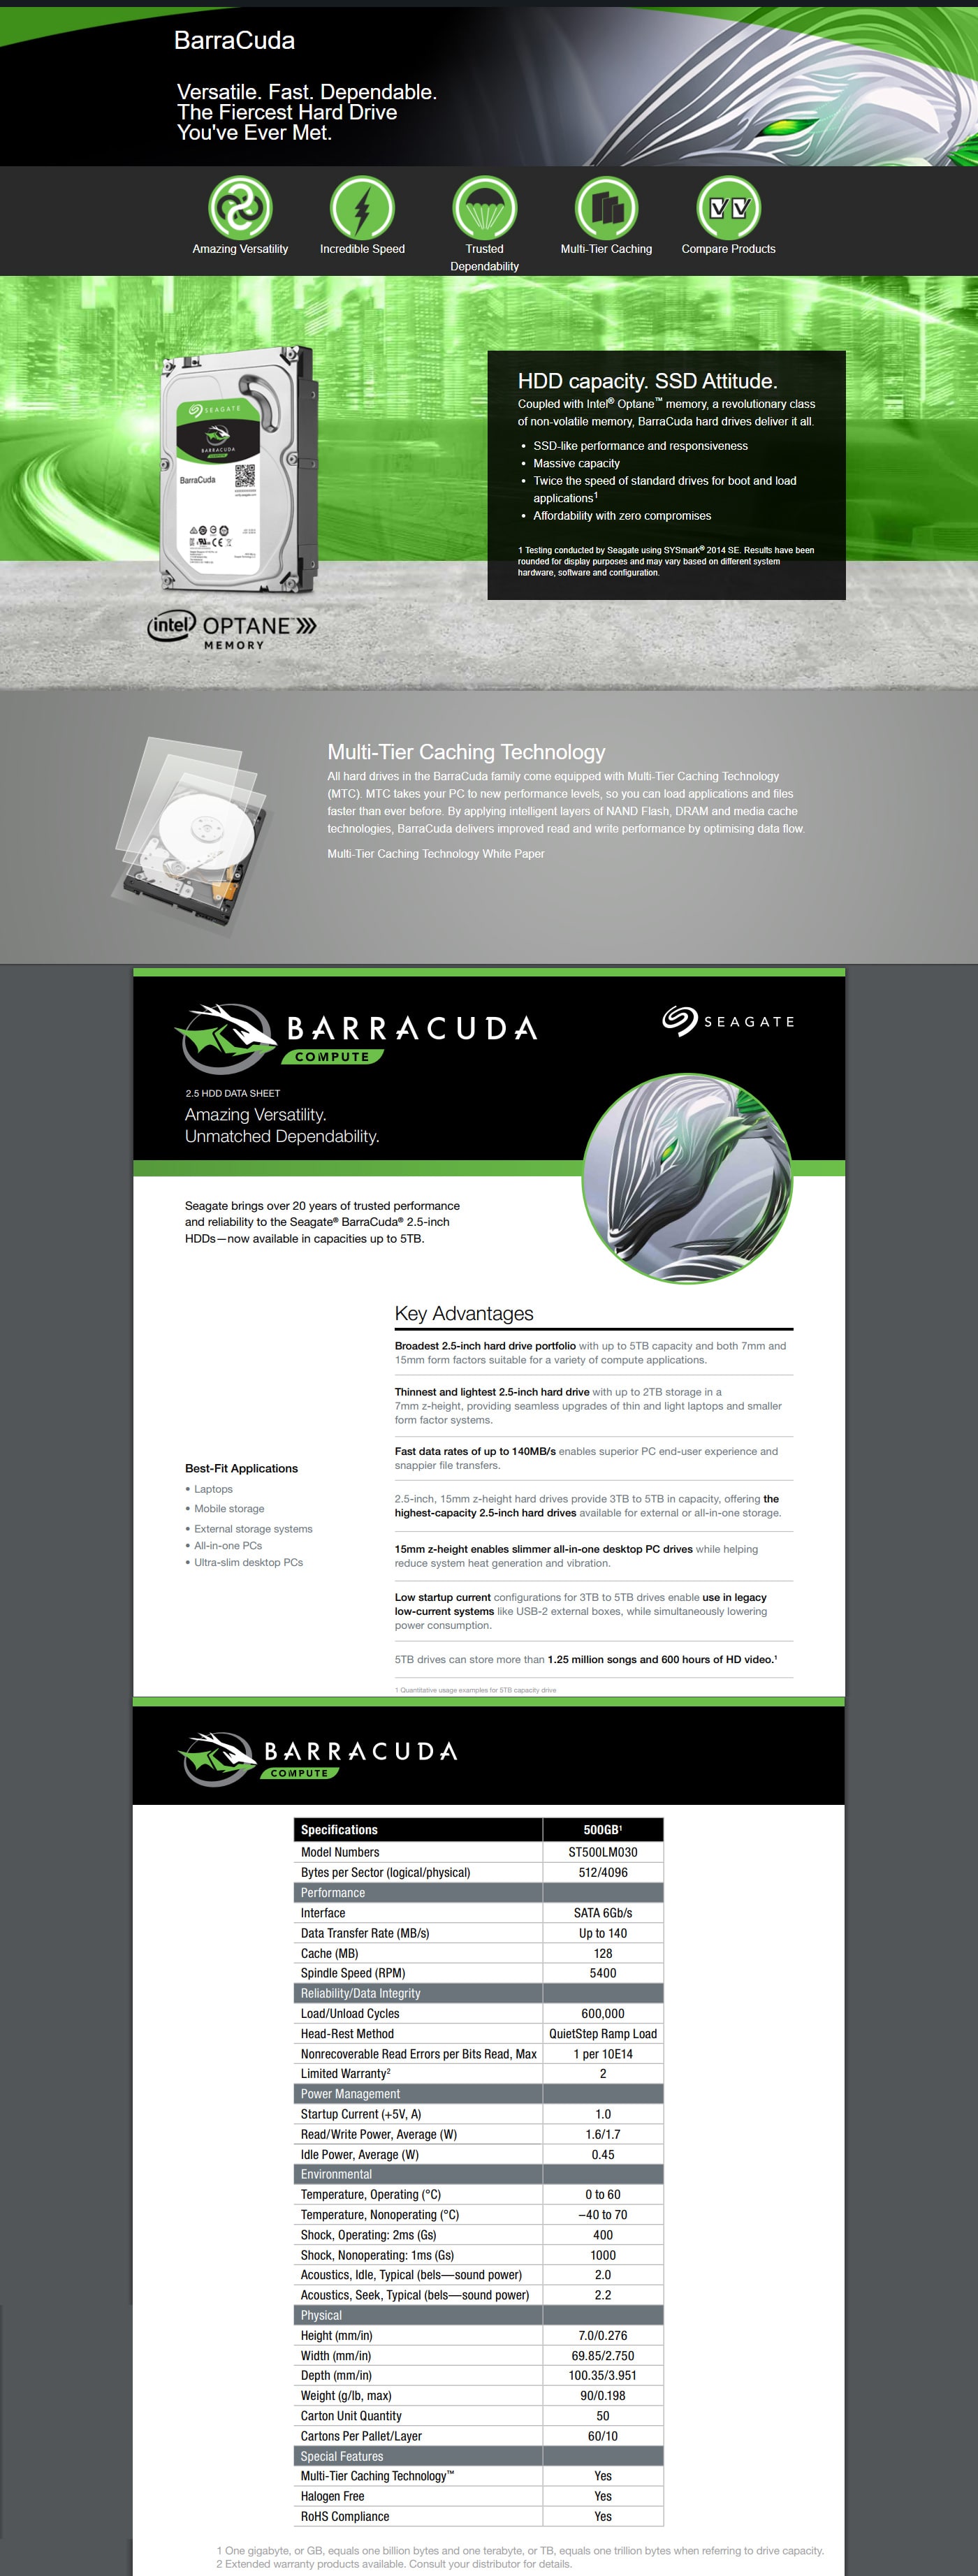 Seagate BarraCuda 500GB Laptop Internal Hard Drive